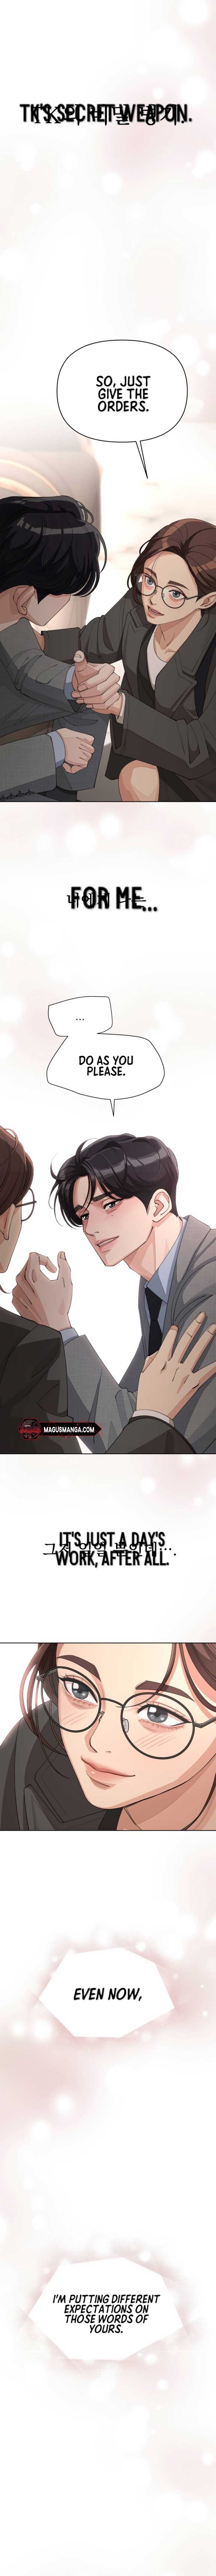 Lee Seob’s love chapter 31